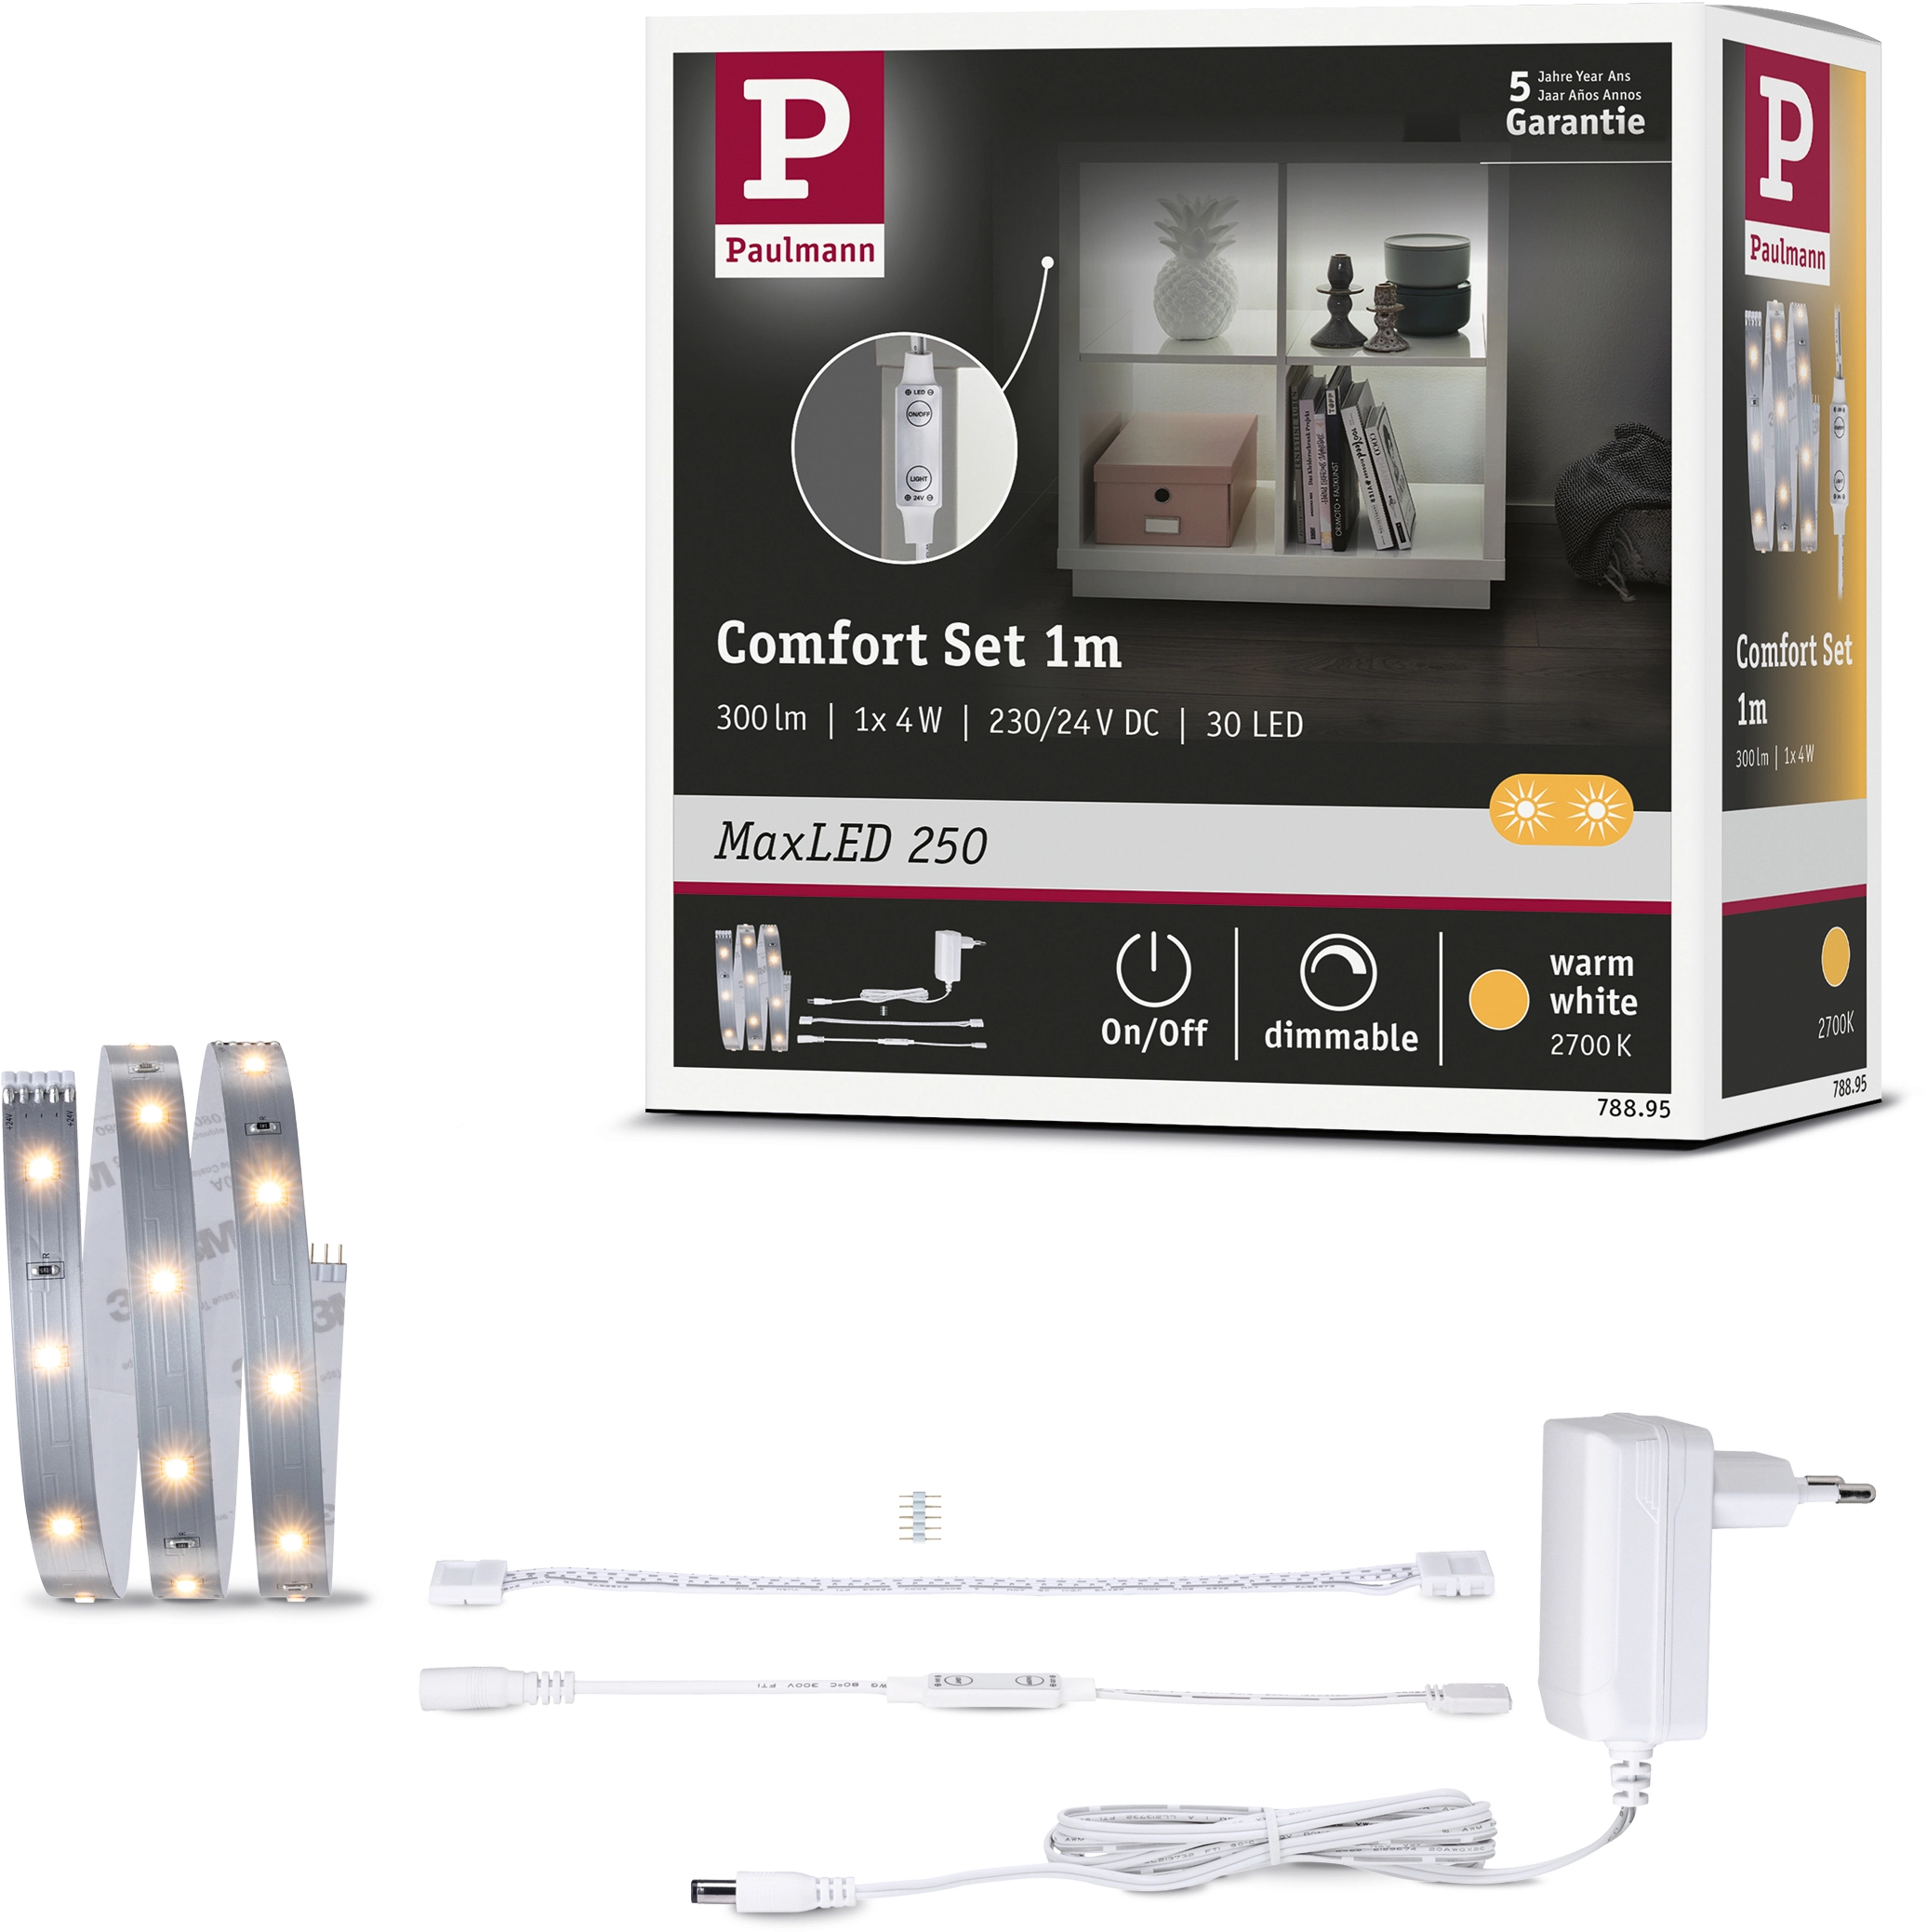 Paulmann MaxLED 250 LED OBI Strip 1 Regal m kaufen Komfort bei Weiß Basis-Set